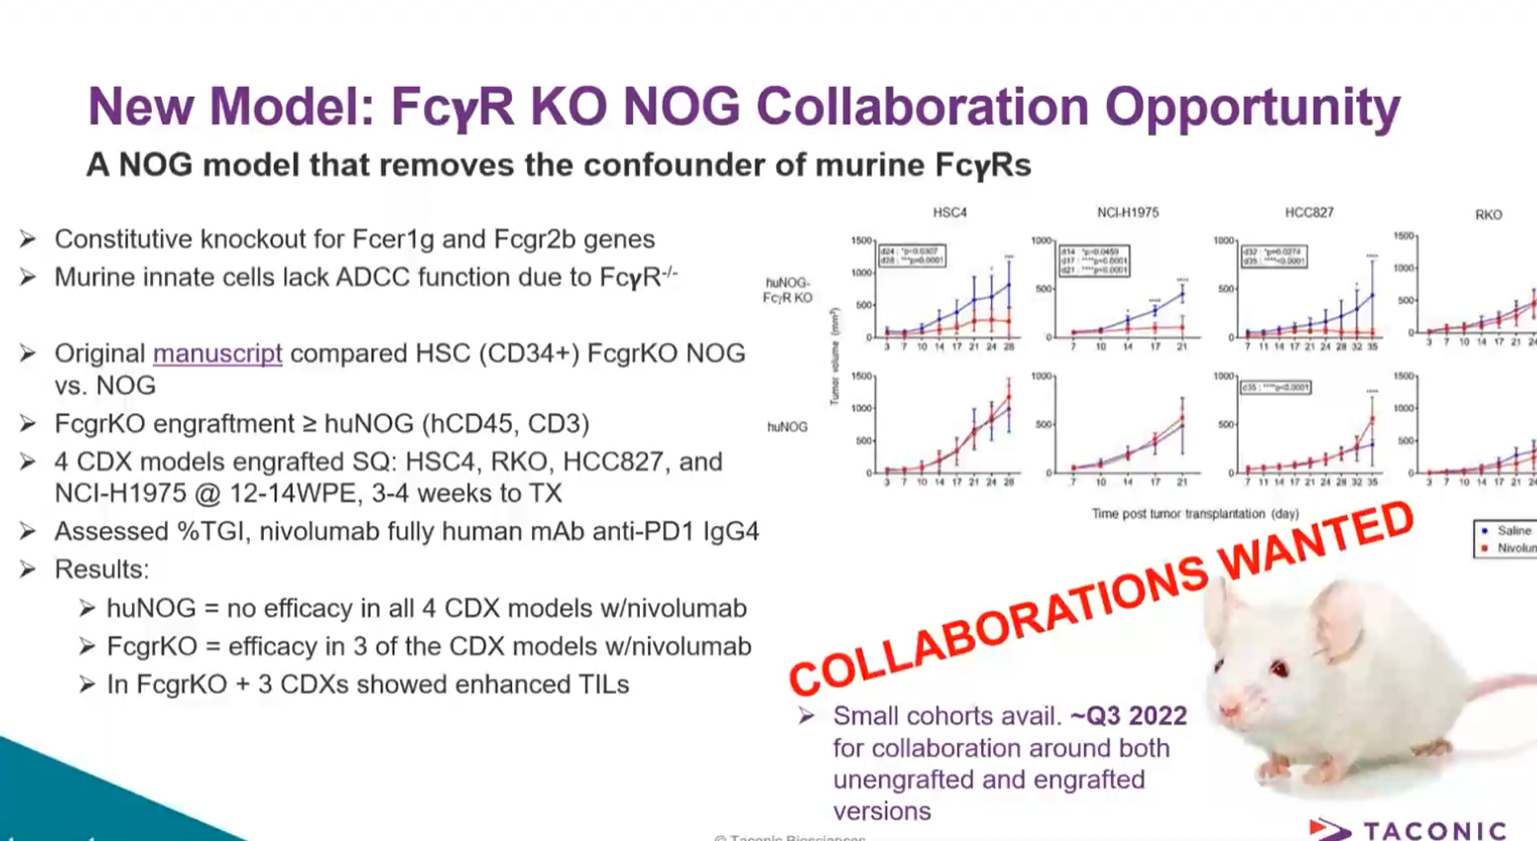 FcyRs KO NOG Collaboration Opportunity